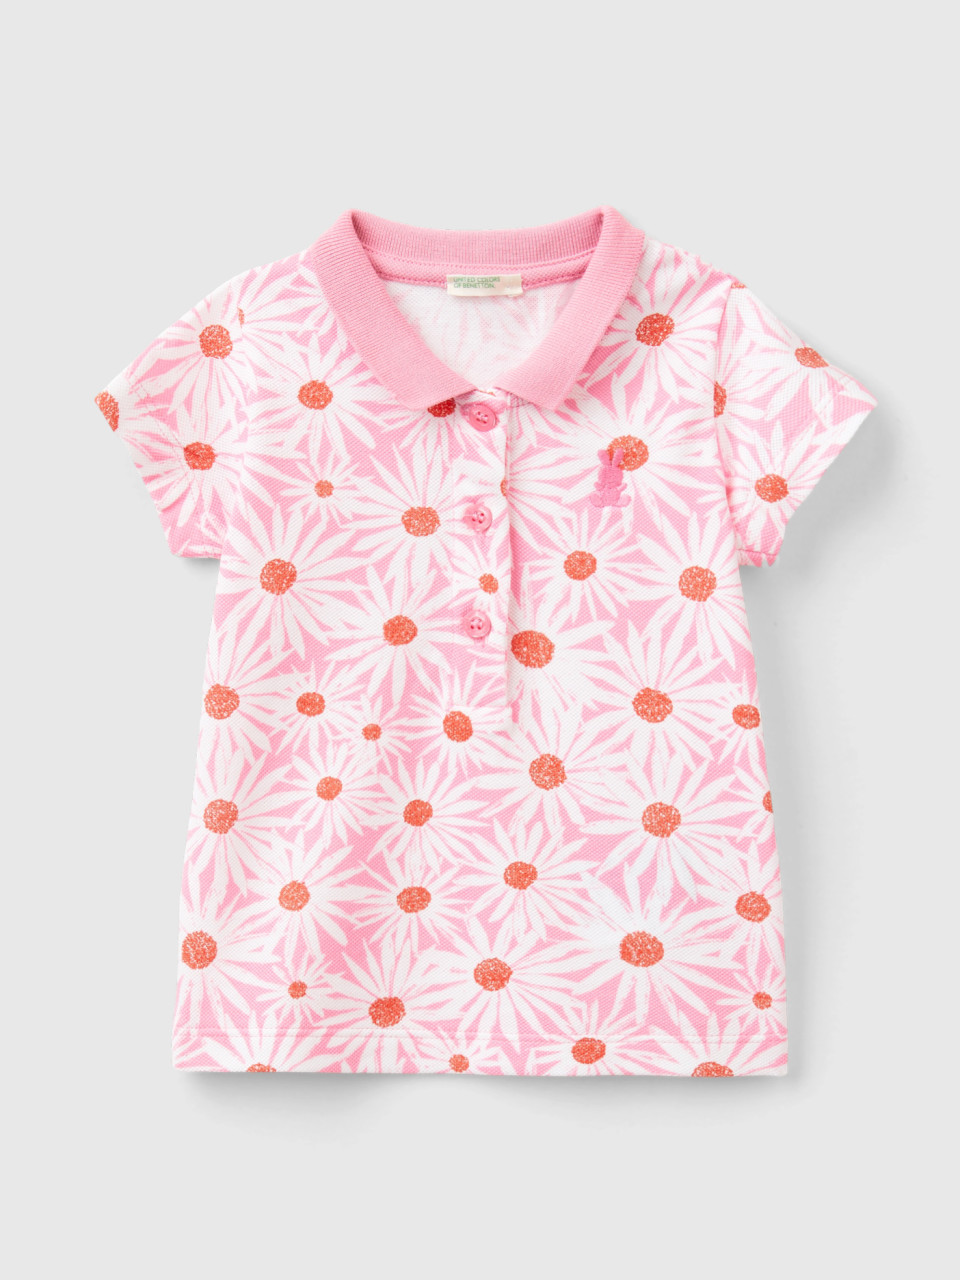 Benetton, Floral Print Polo, Soft Pink, Kids